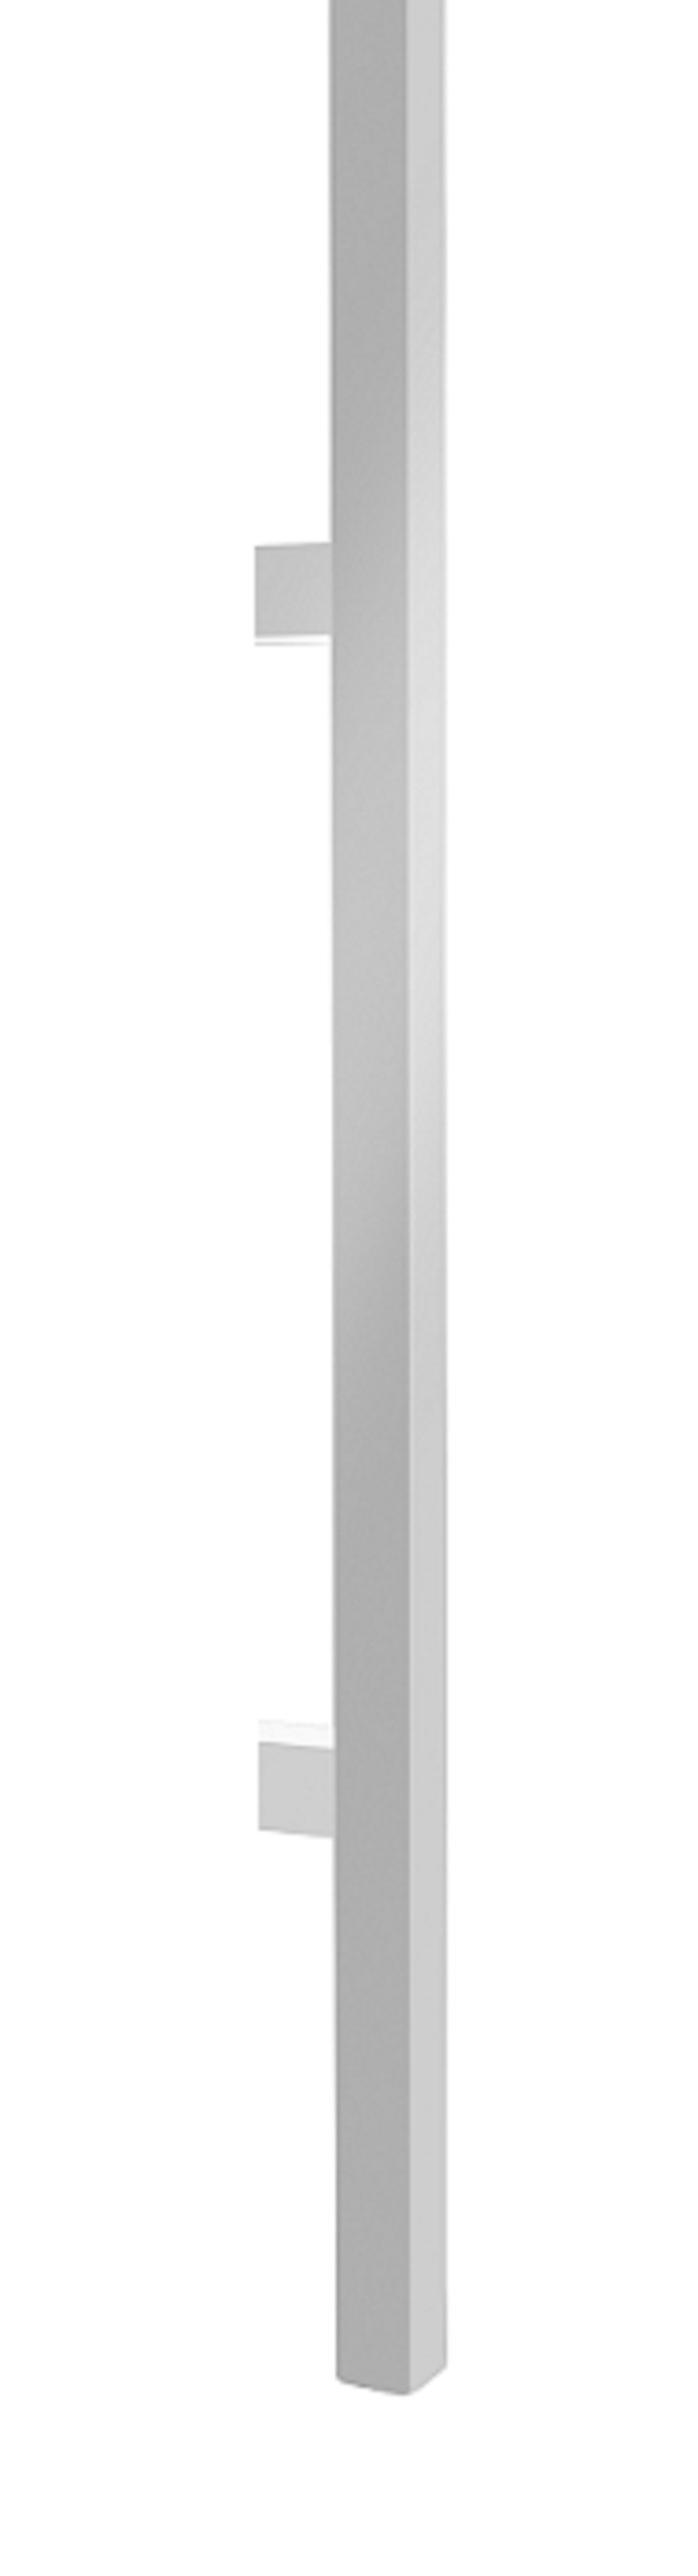 Manillón rectangular inox 1000mm 600mm epoxi blanco